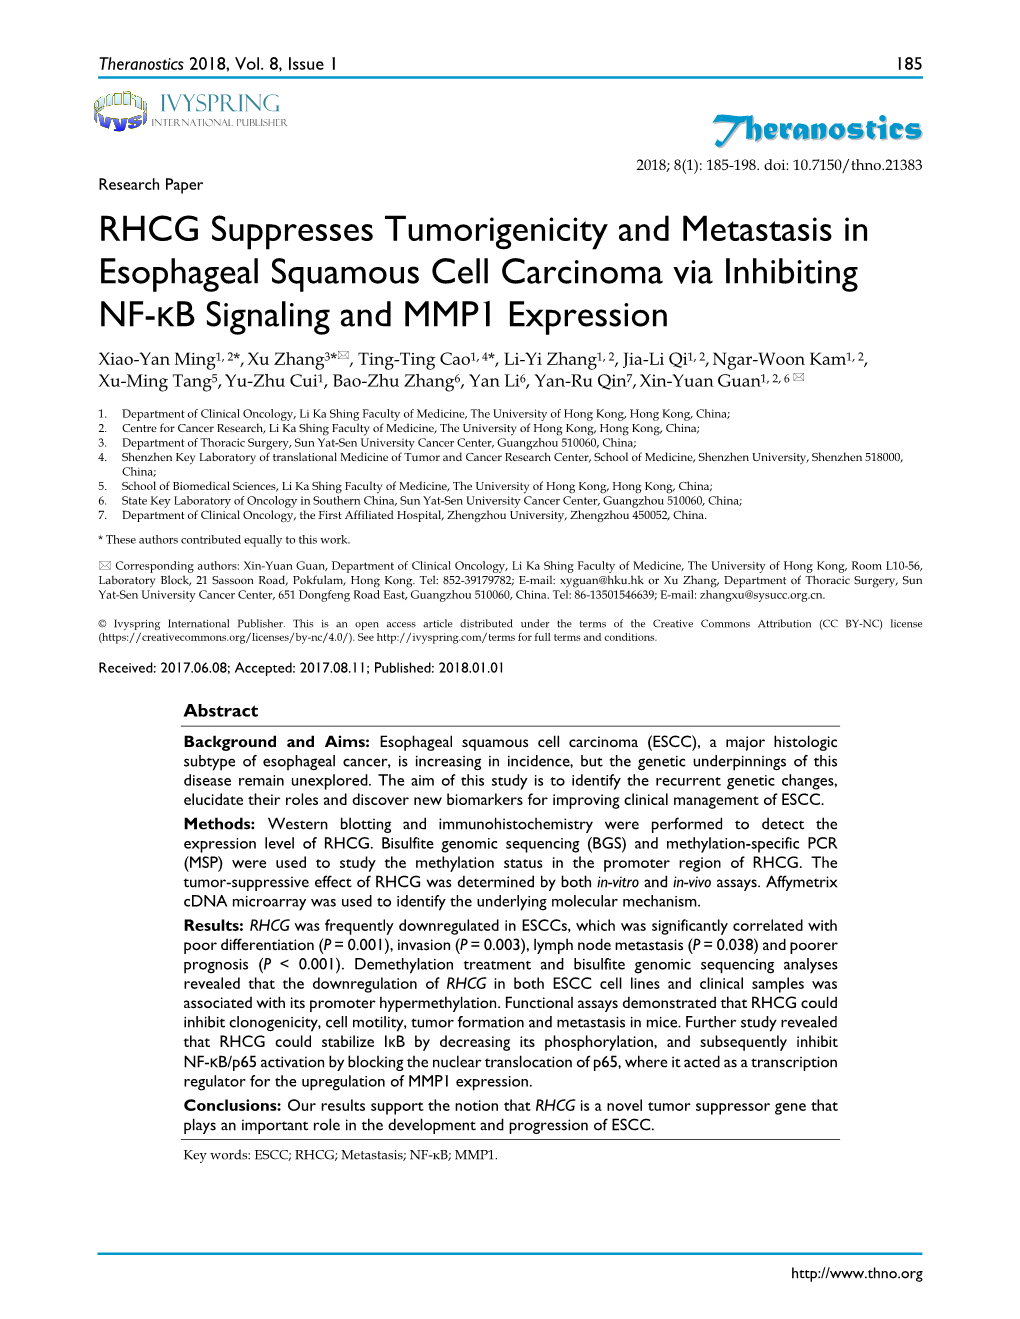 Theranostics RHCG Suppresses Tumorigenicity and Metastasis In